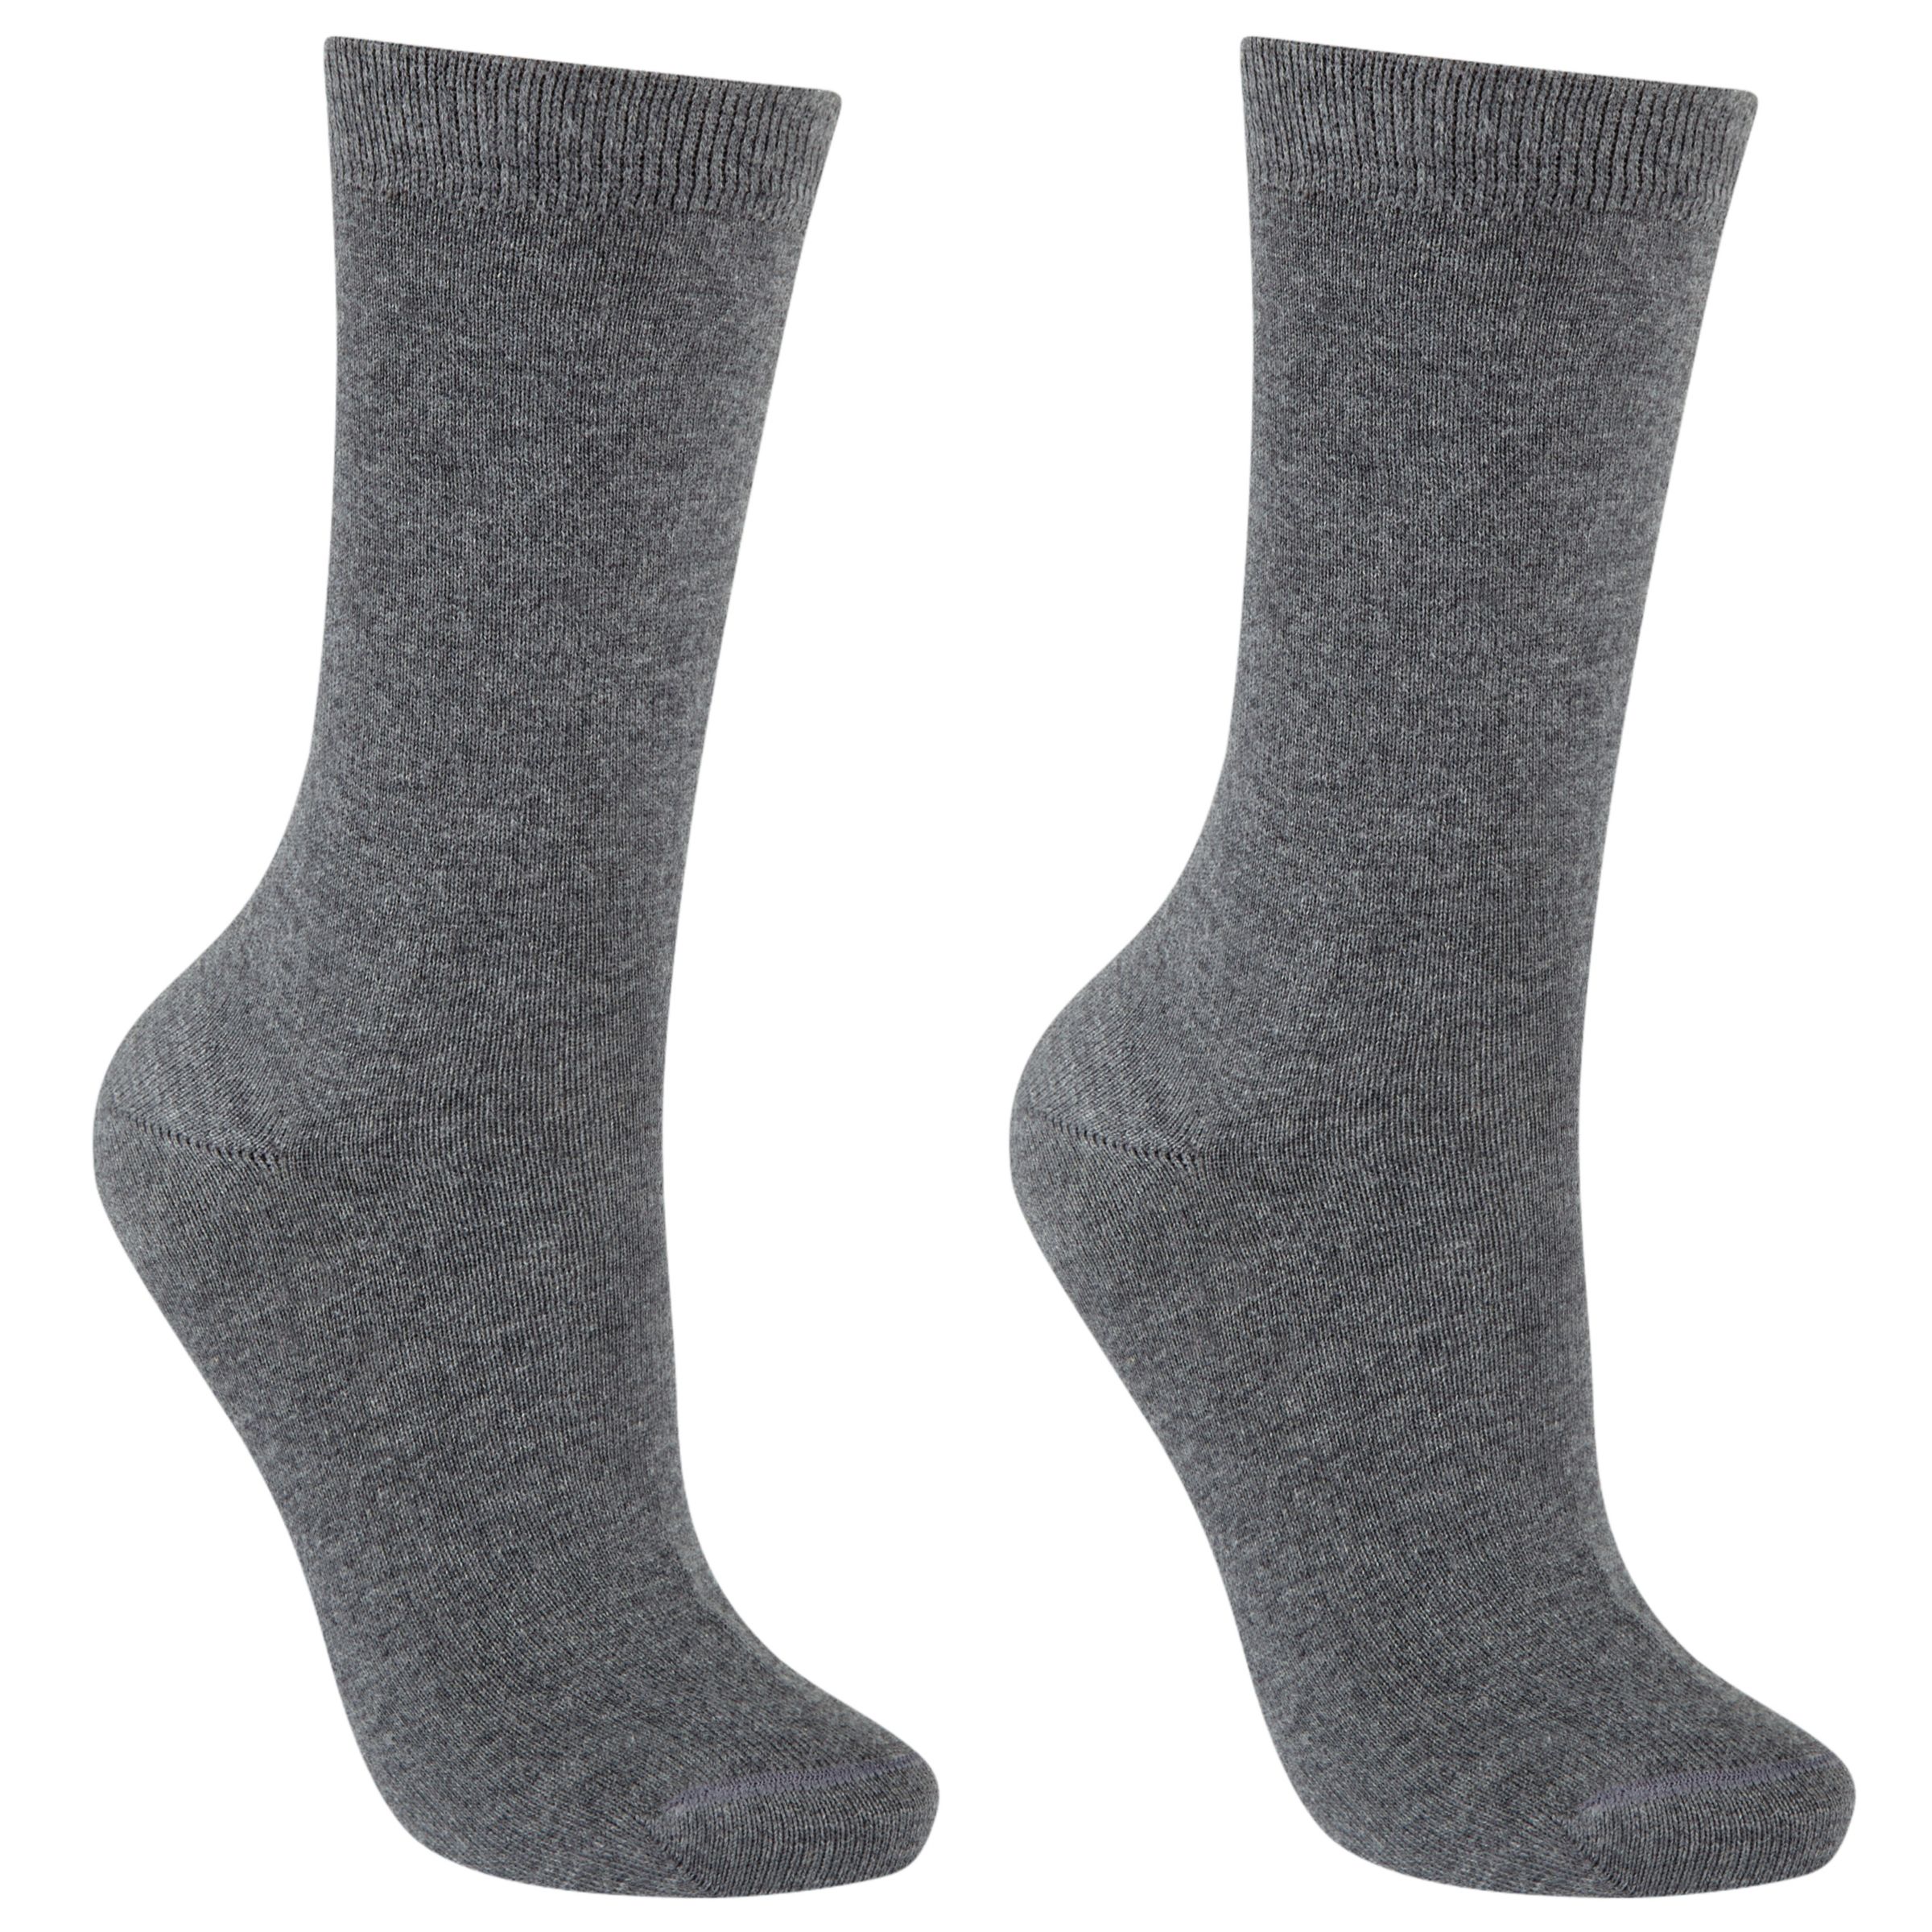 John Lewis Women's Cotton Ankle Socks, Pack of 2, Grey, S-M